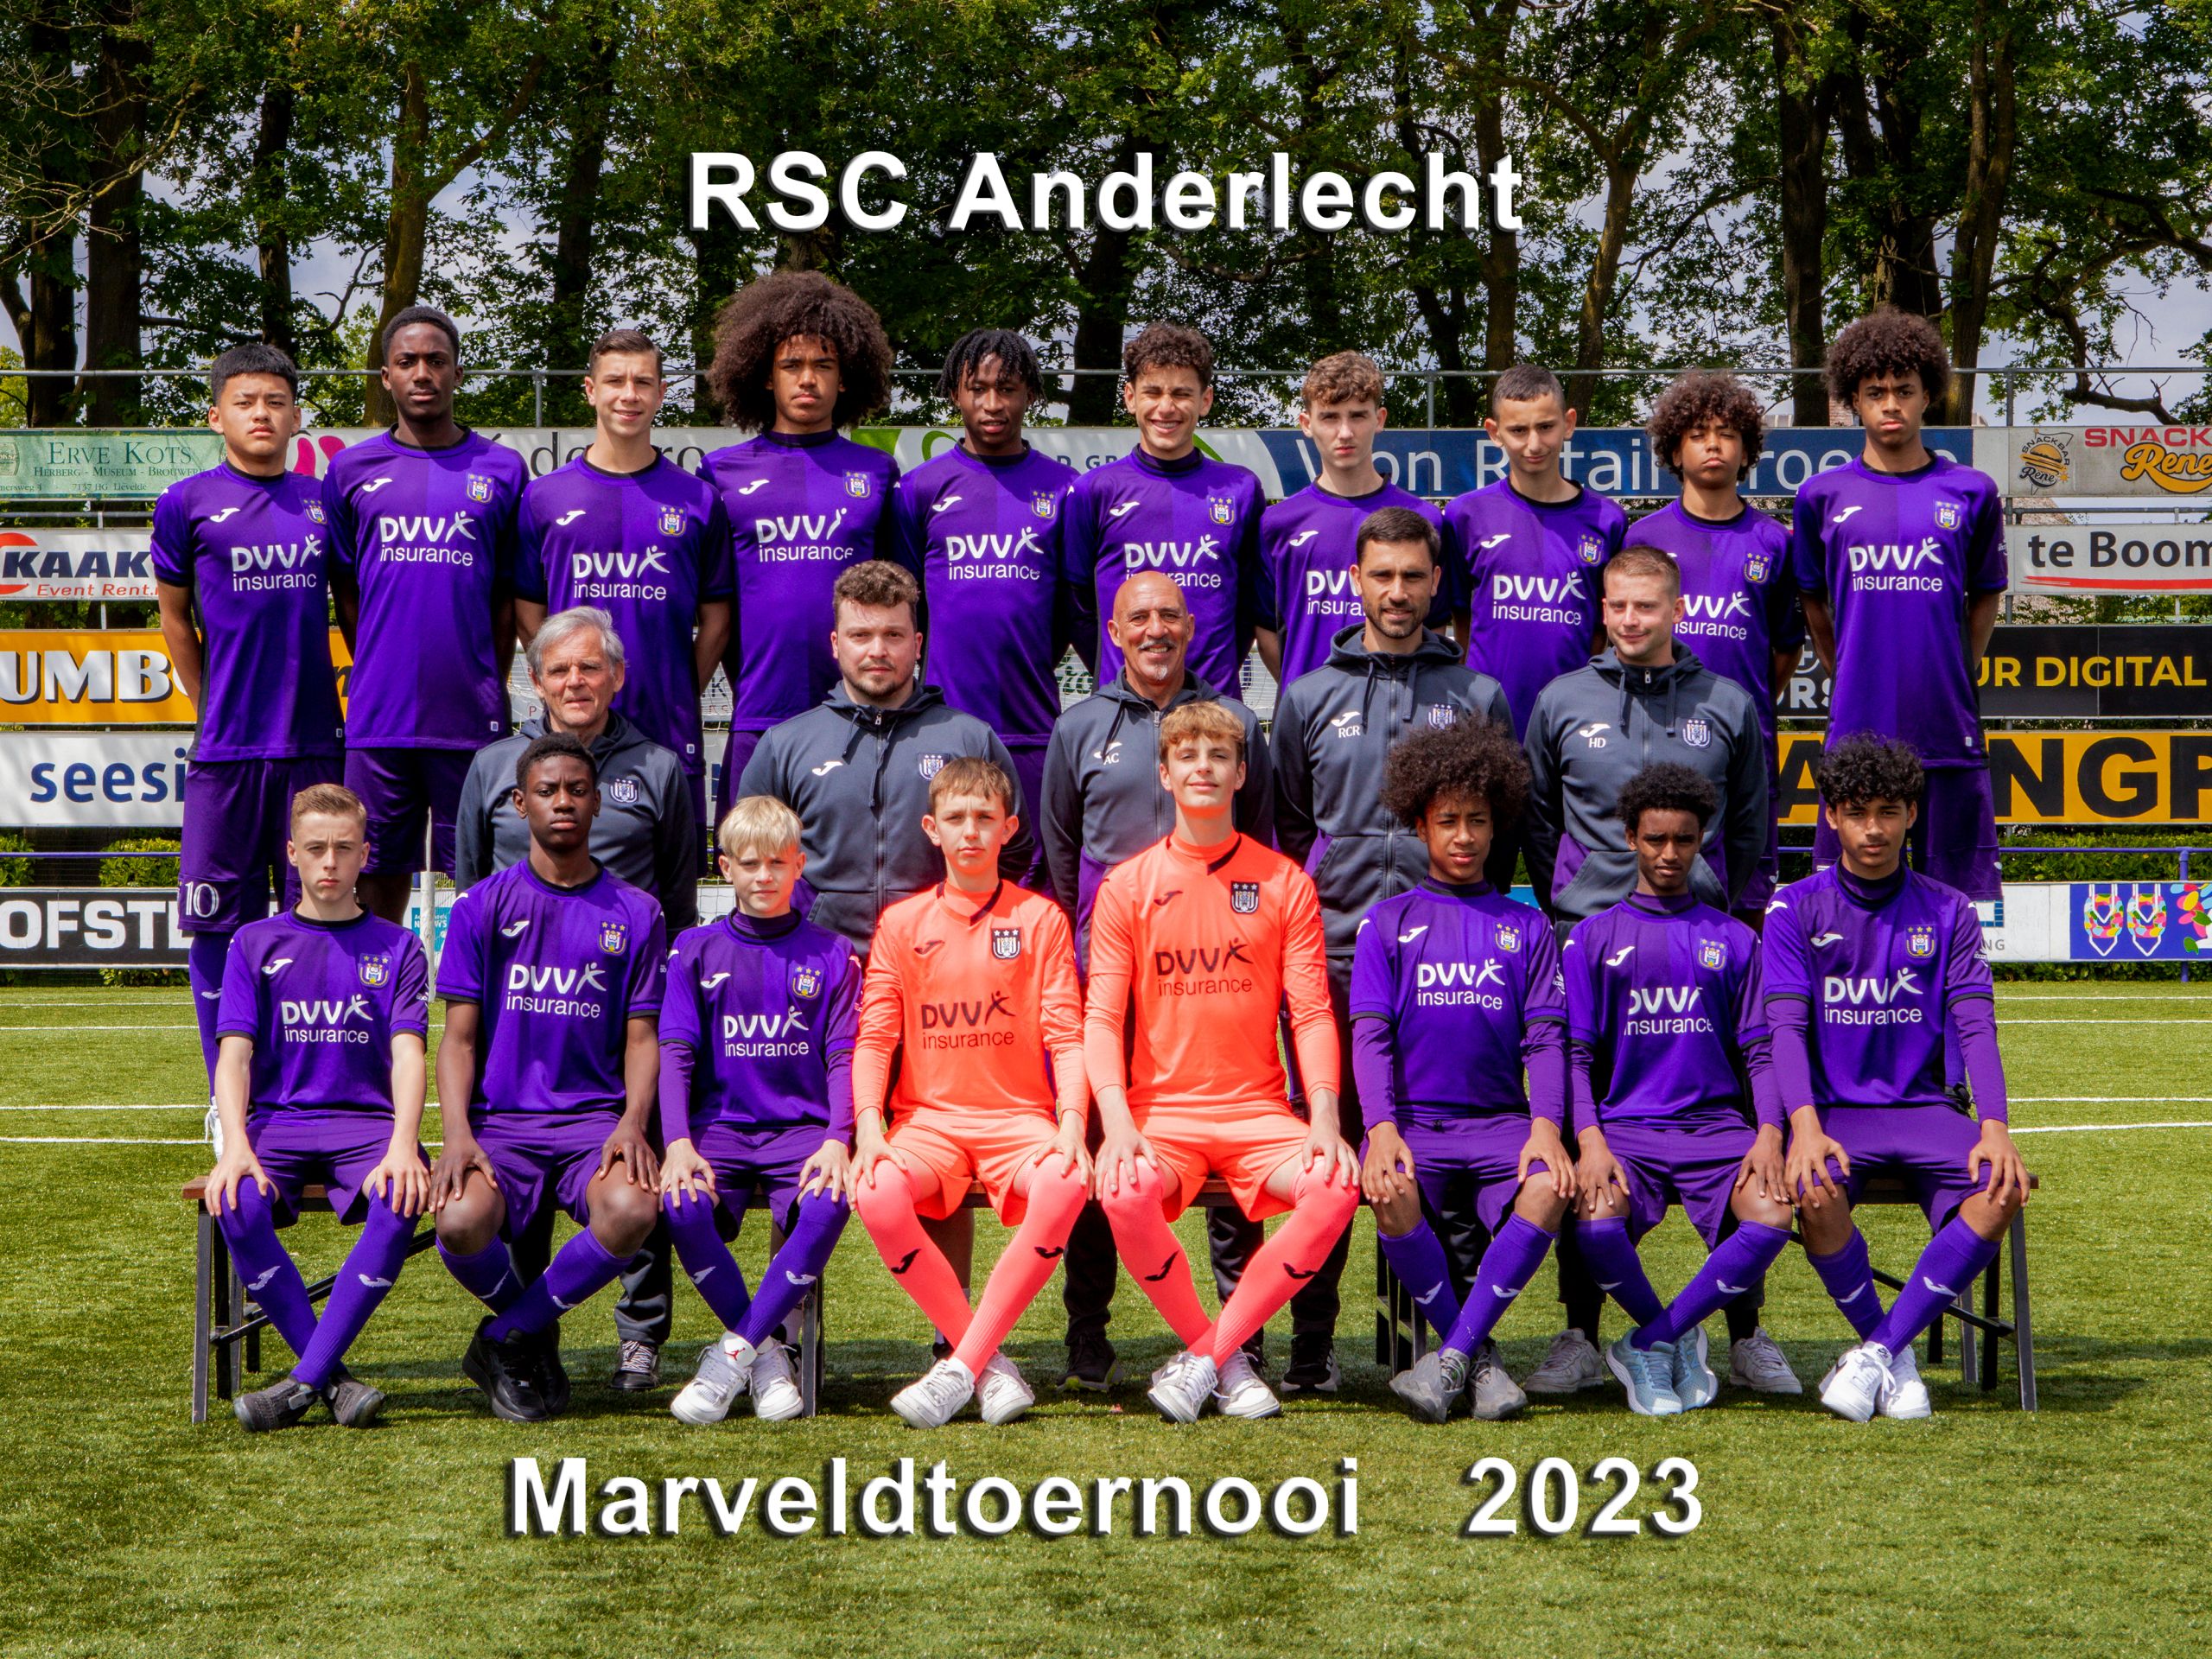 Marveld Tournament 2023 - Team RSC Anderlecht